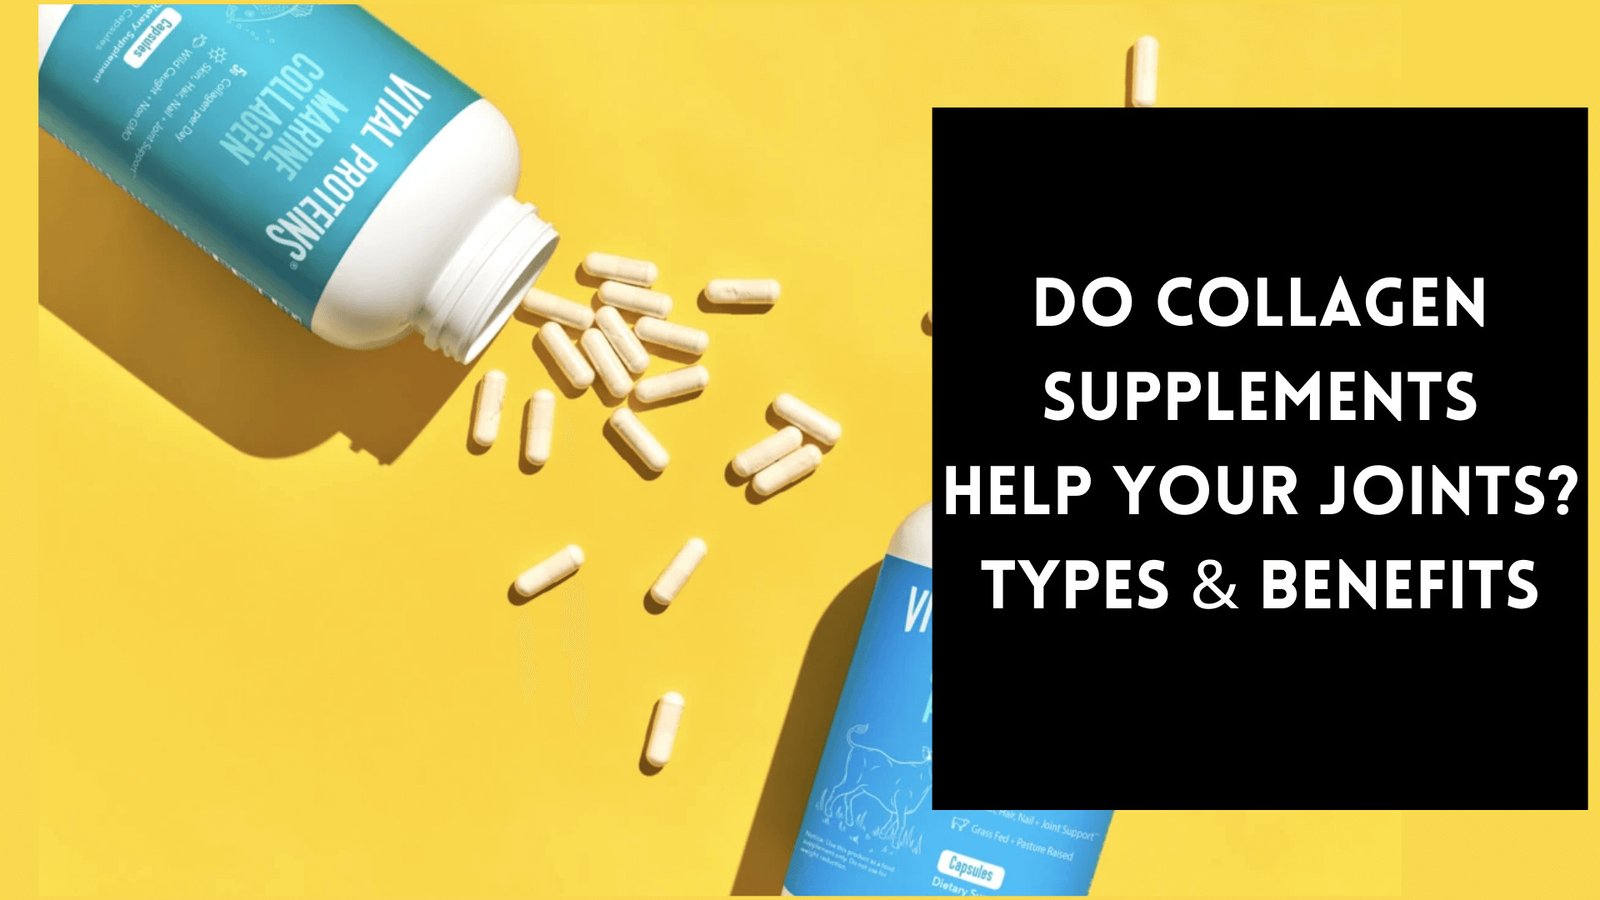 Collagen Supplements Help Your Joints (1)